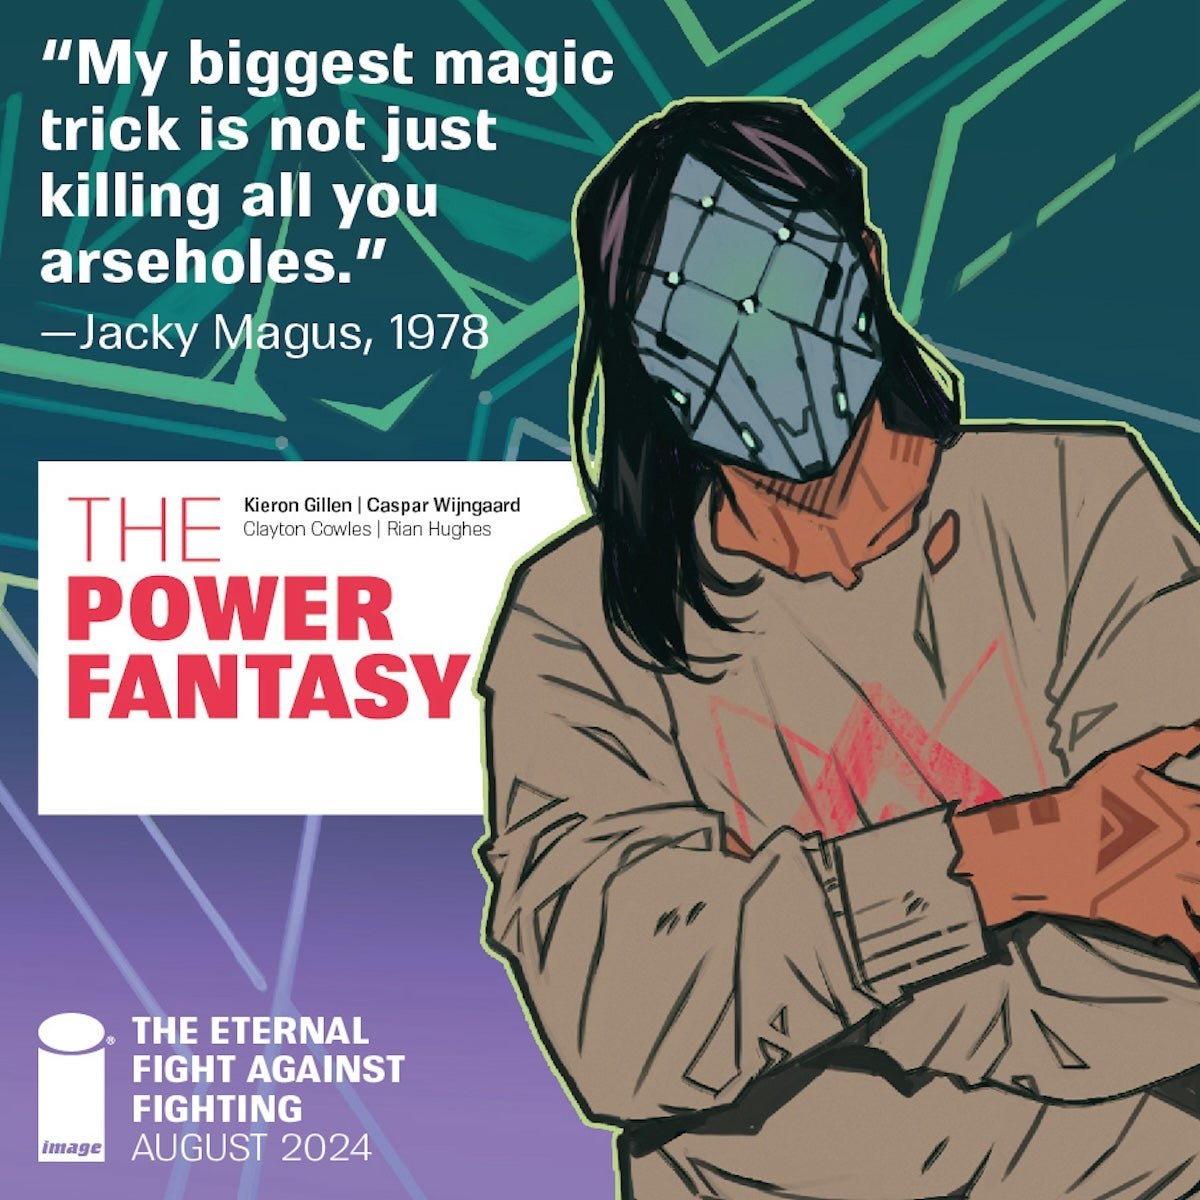 The Power Fantasy - Jacky Magus